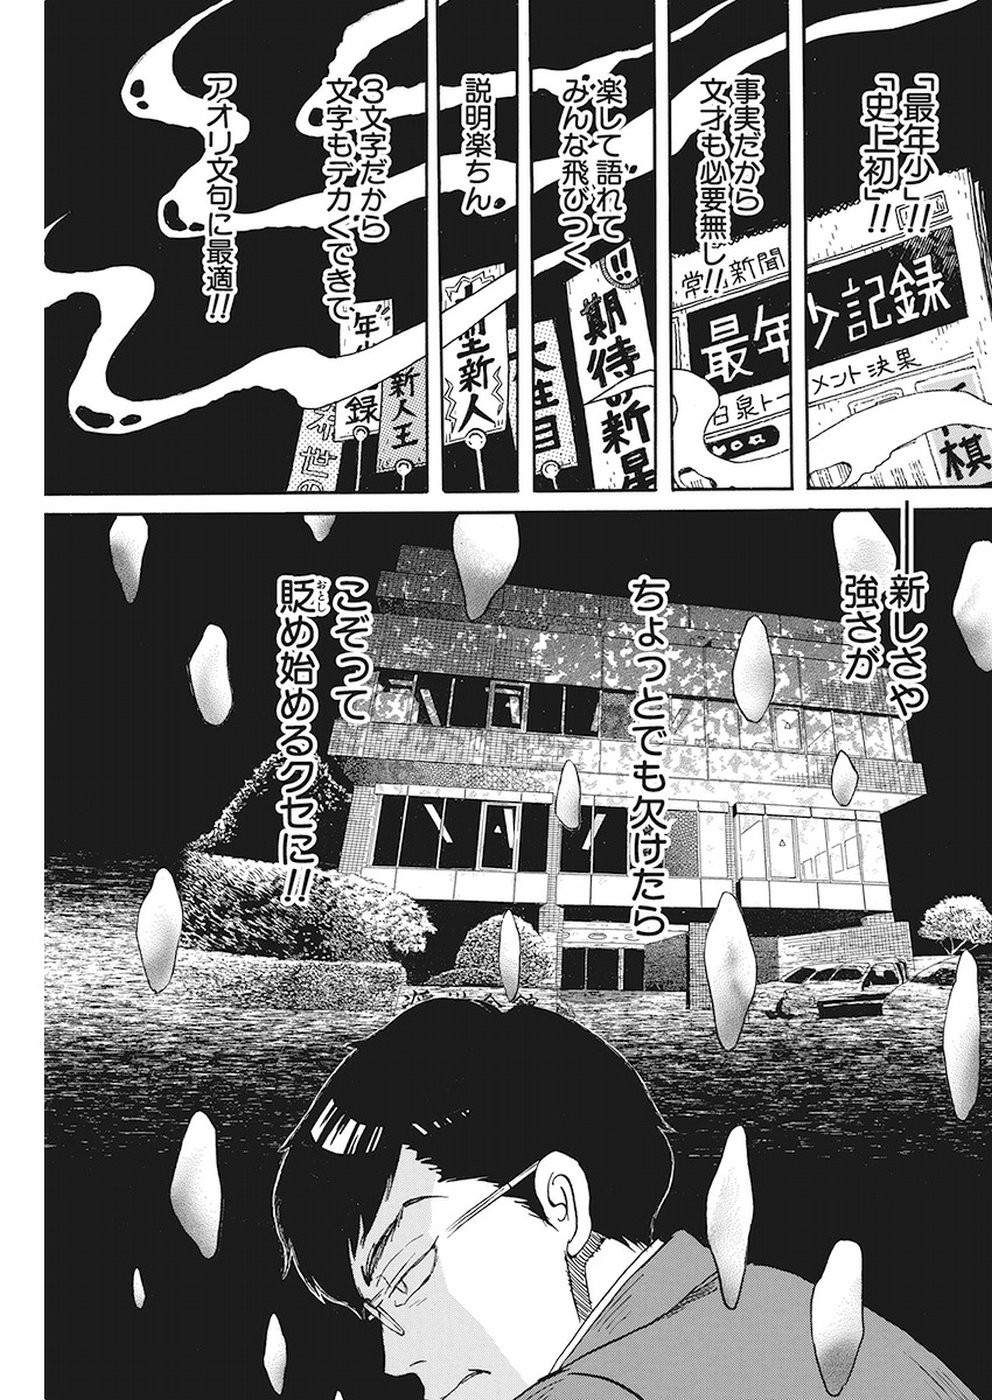 3 Gatsu no Lion - Chapter 156 - Page 11